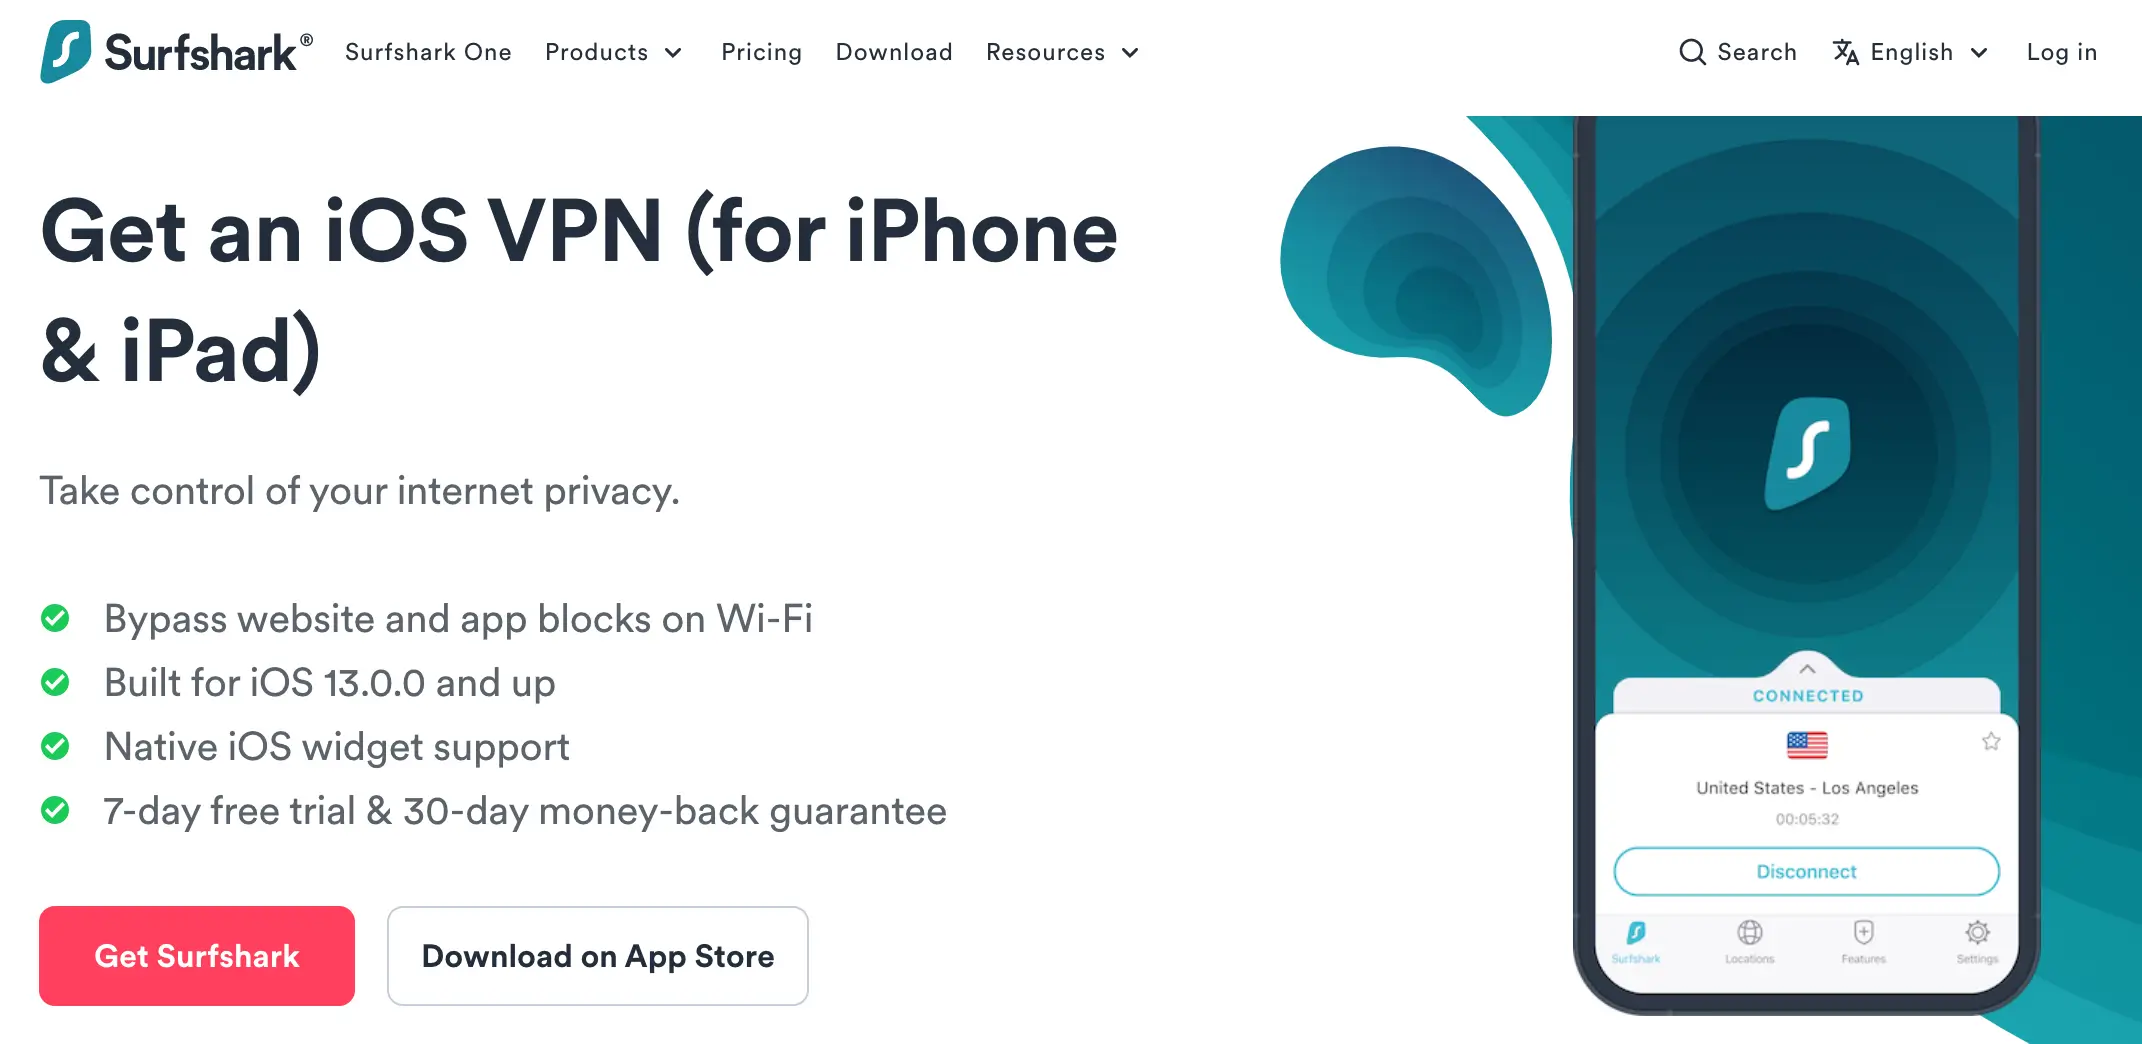 Best free VPNs for iPhone: Surfshark